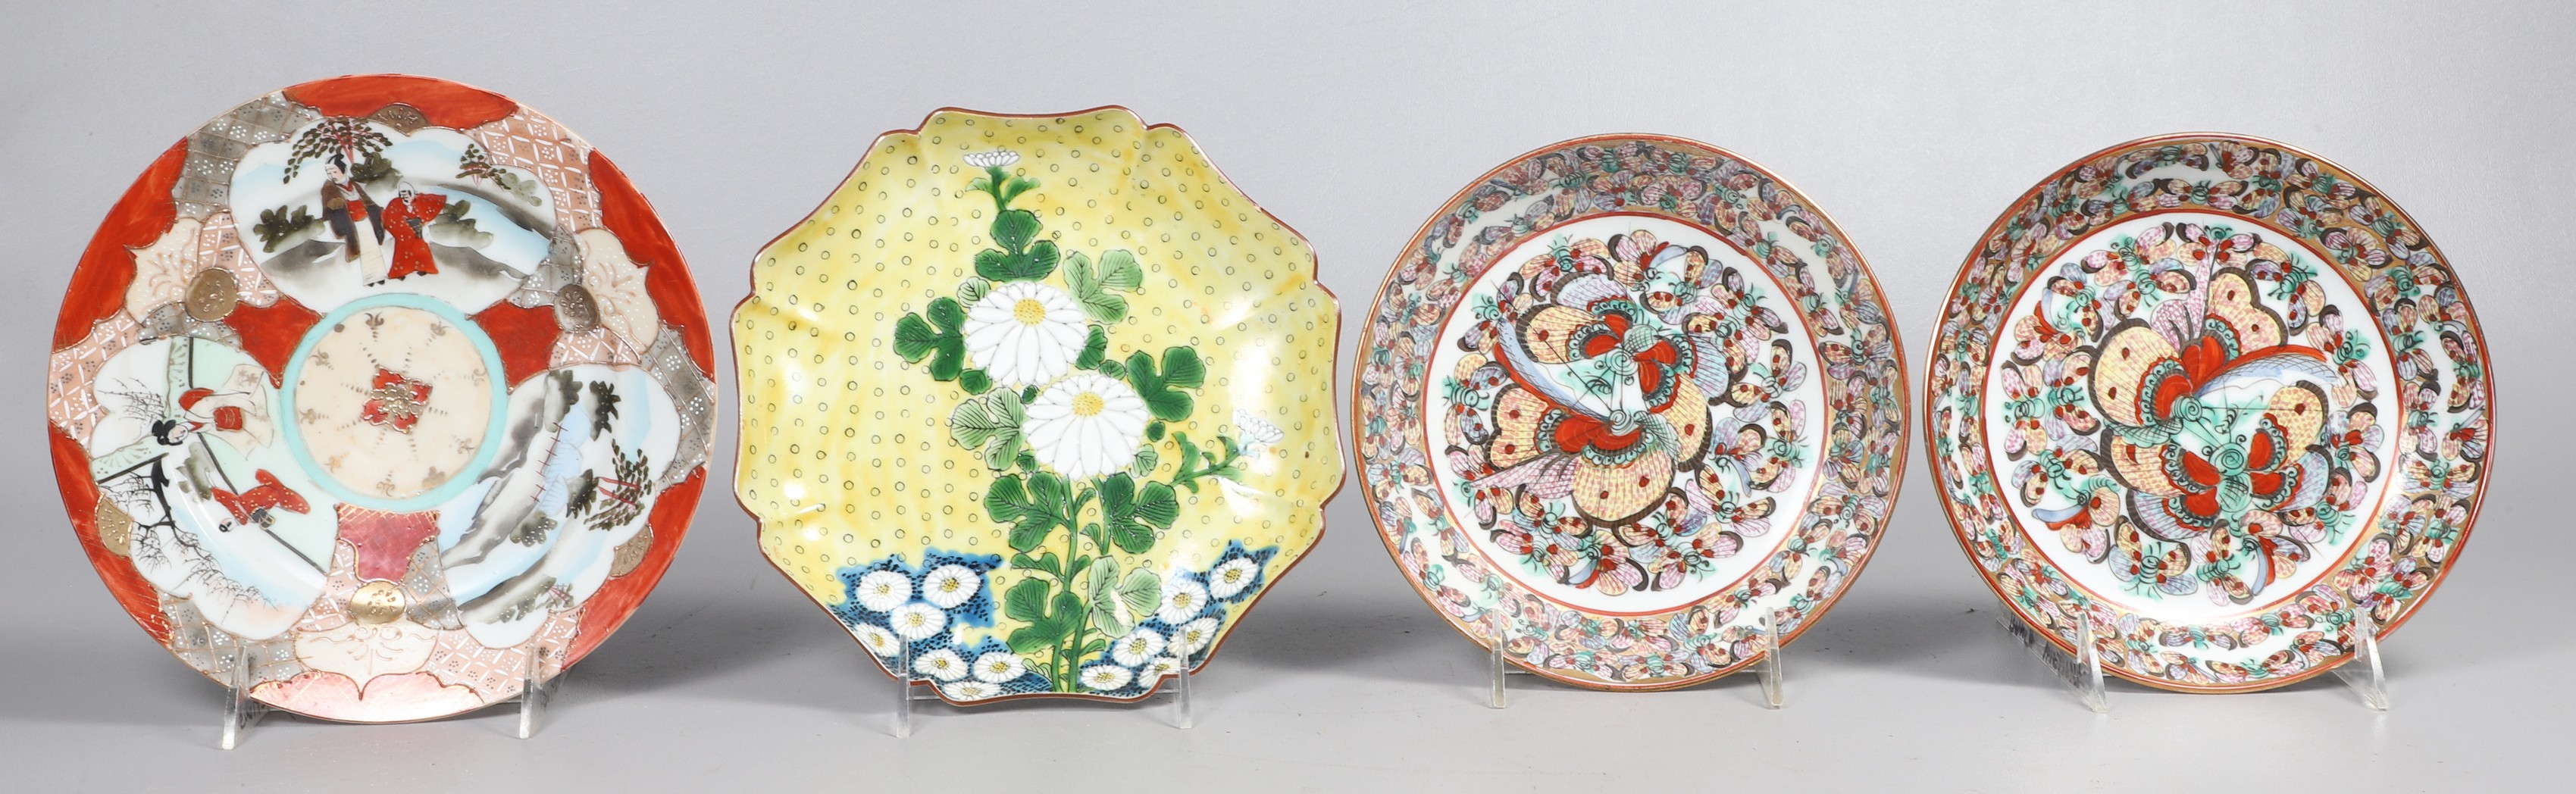  2 Japanese porcelain plates  2e089c